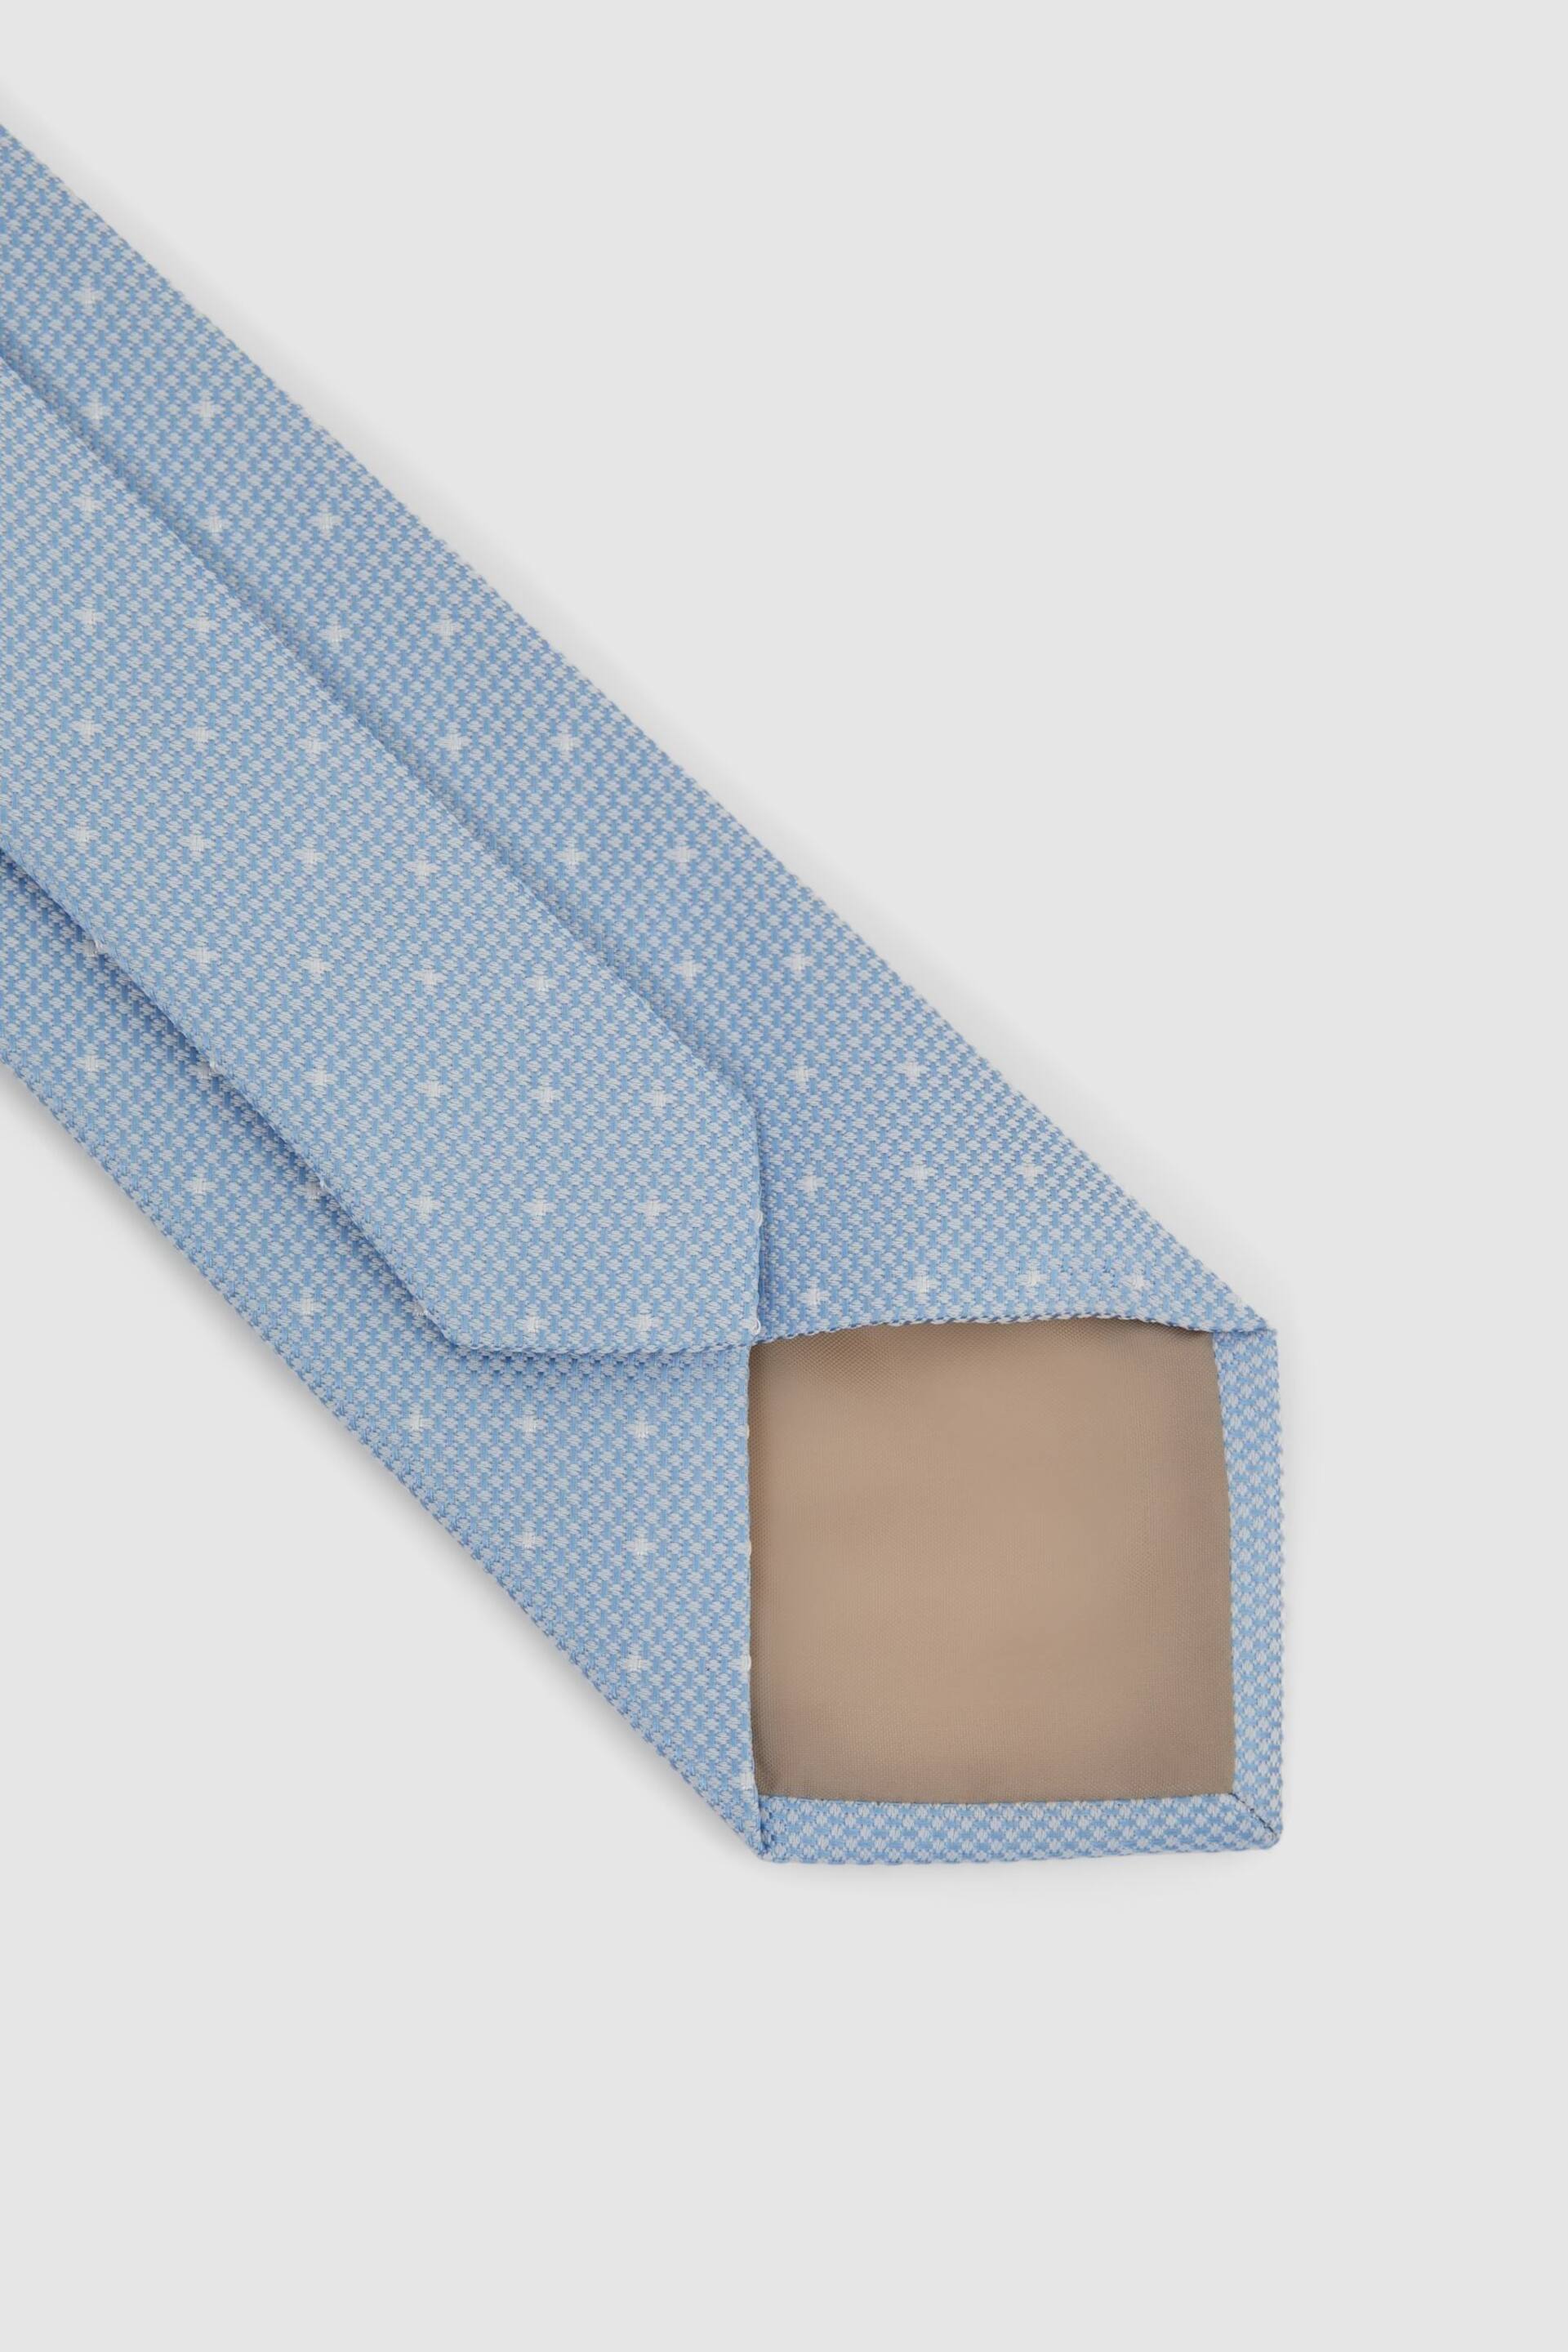 Reiss Soft Blue Liam Silk Polka Dot Tie - Image 4 of 5